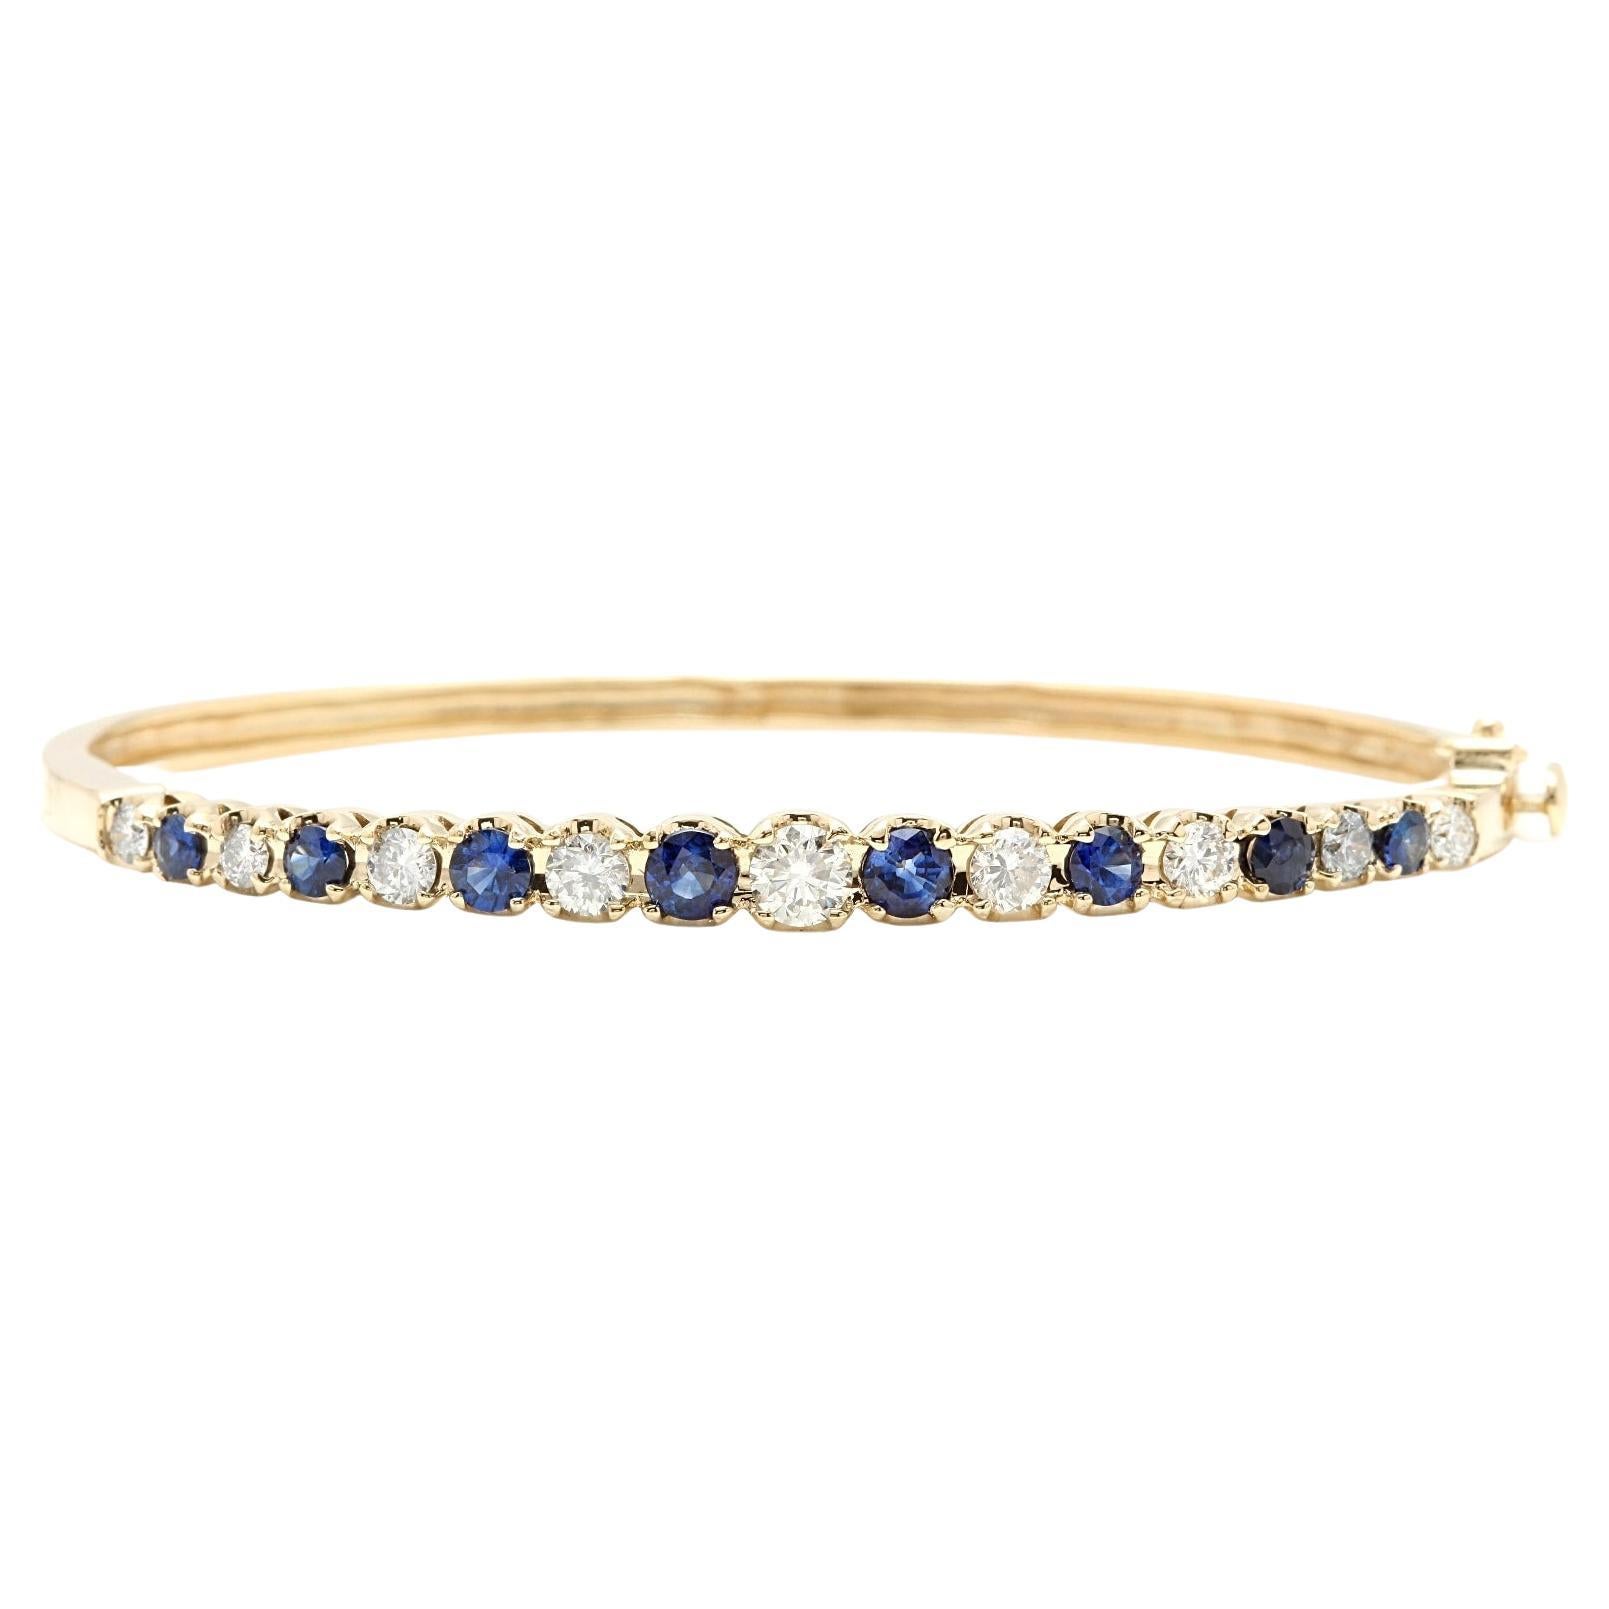 Bracelet en or jaune massif 14 carats avec diamants naturels et saphirs de 4,00 carats